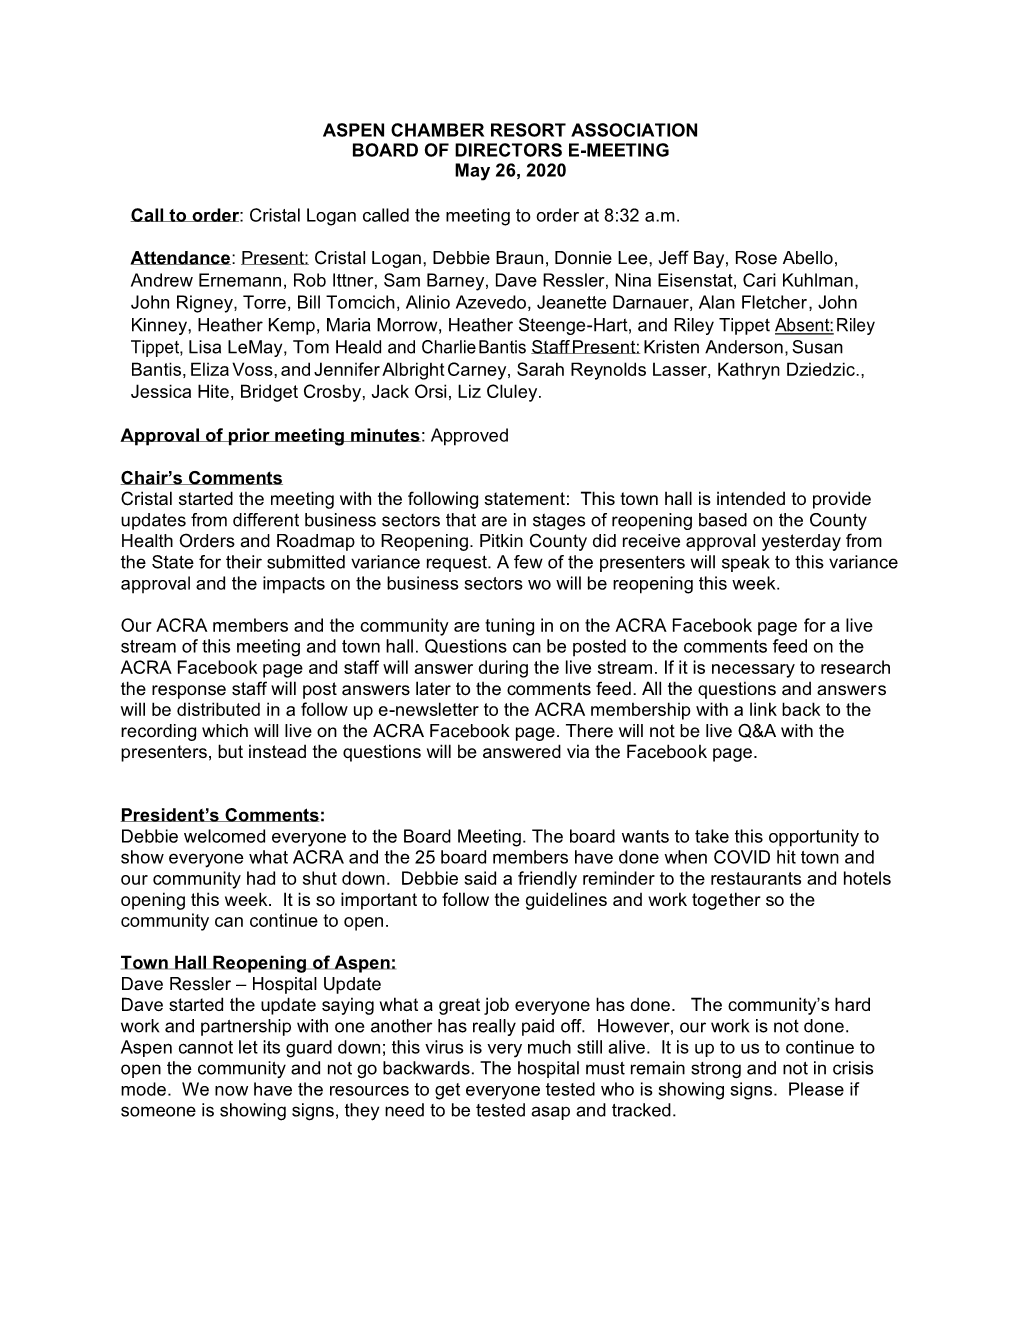 ASPEN CHAMBER RESORT ASSOCIATION BOARD of DIRECTORS E-MEETING May 26, 2020